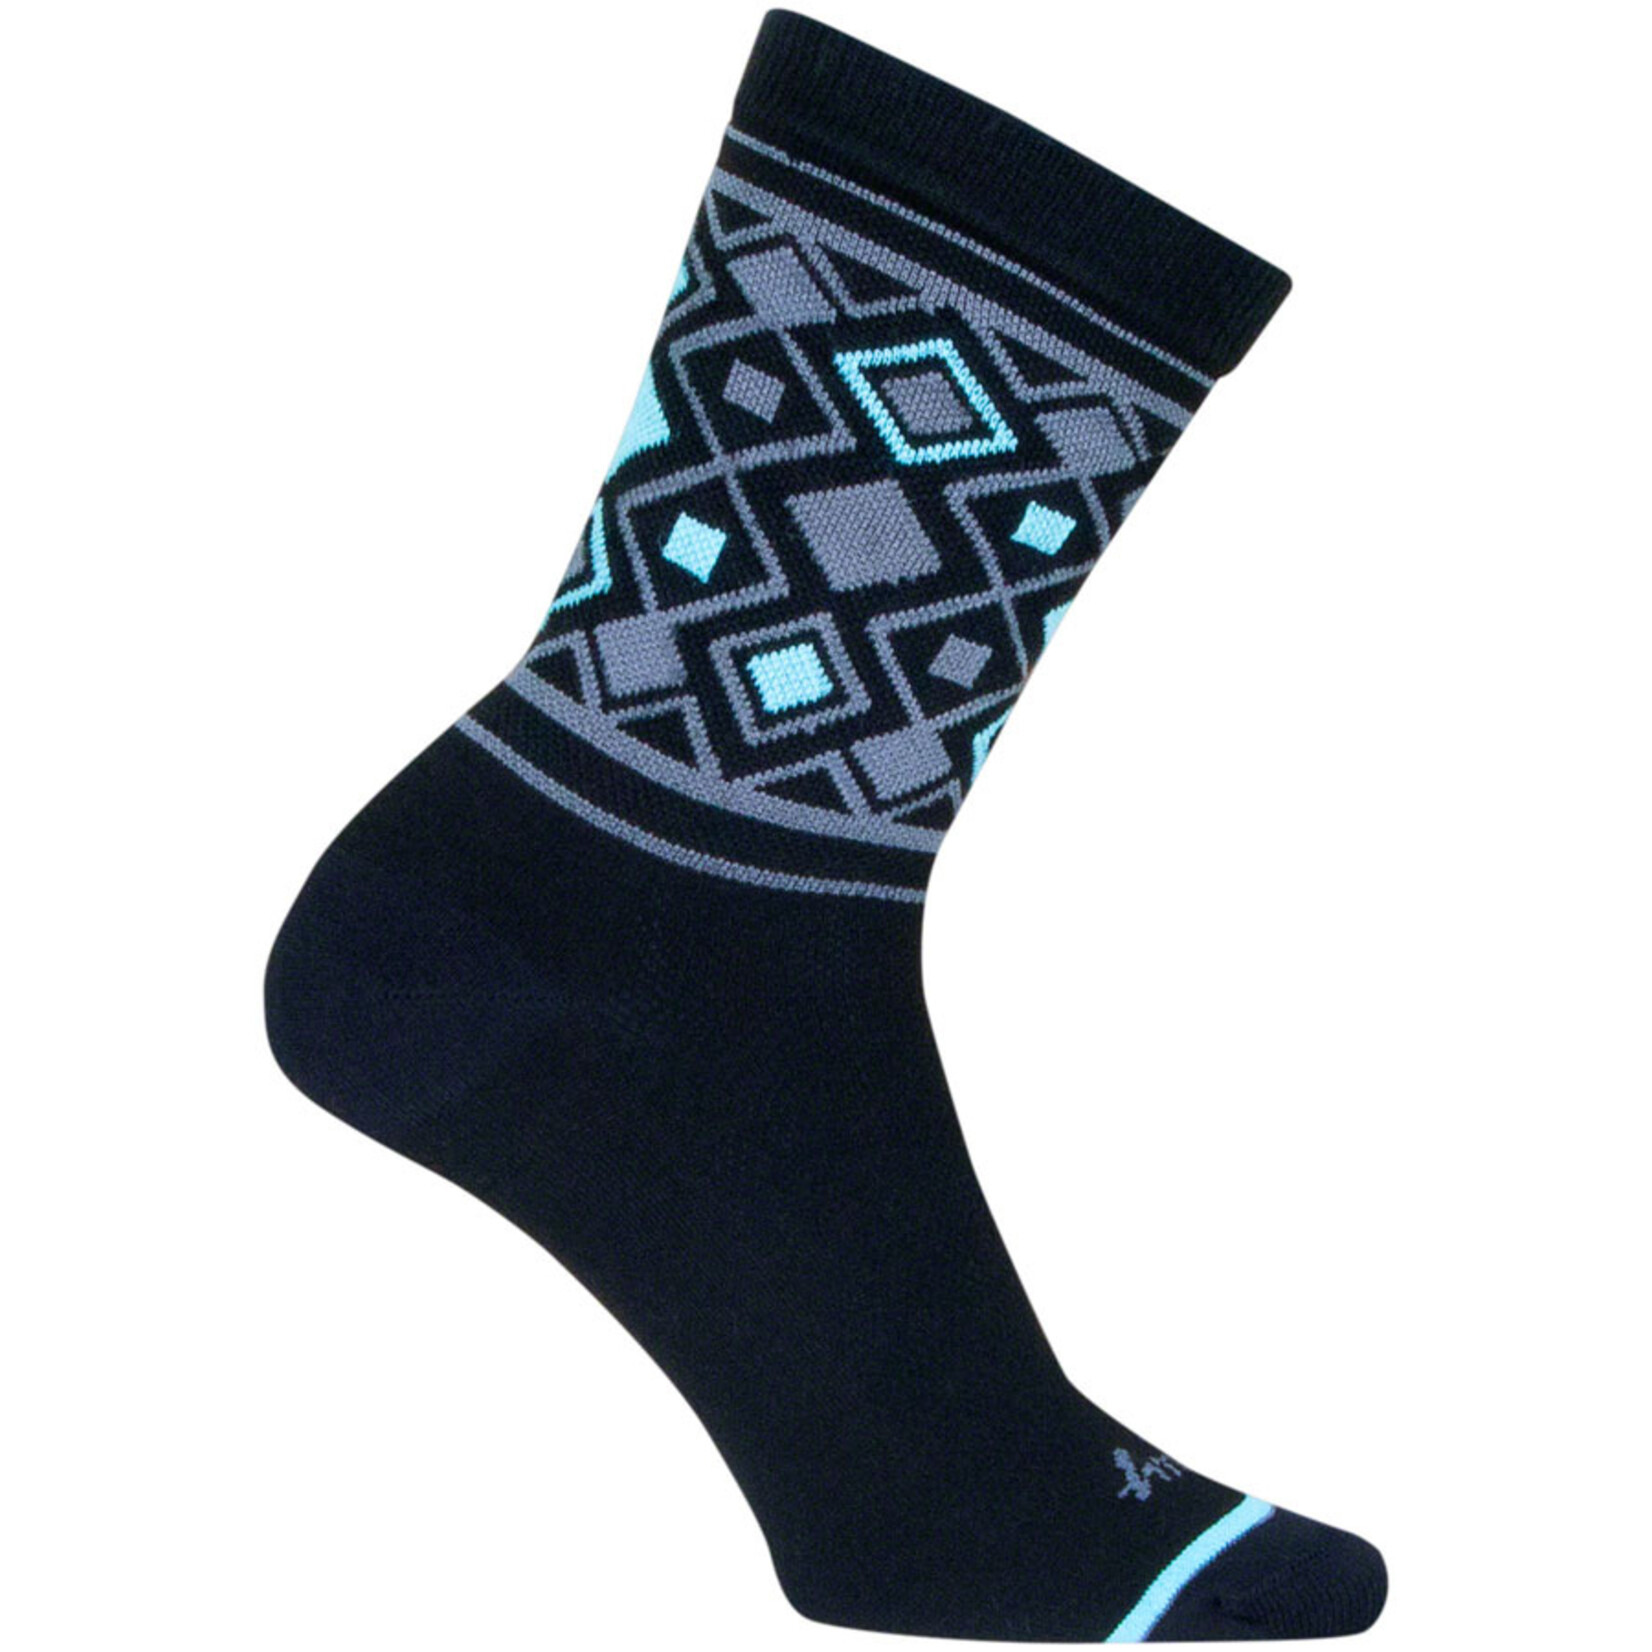 SockGuy SockGuy Diamond Crew Socks - 6 inch, Black/Gray/Blue, Small/Medium